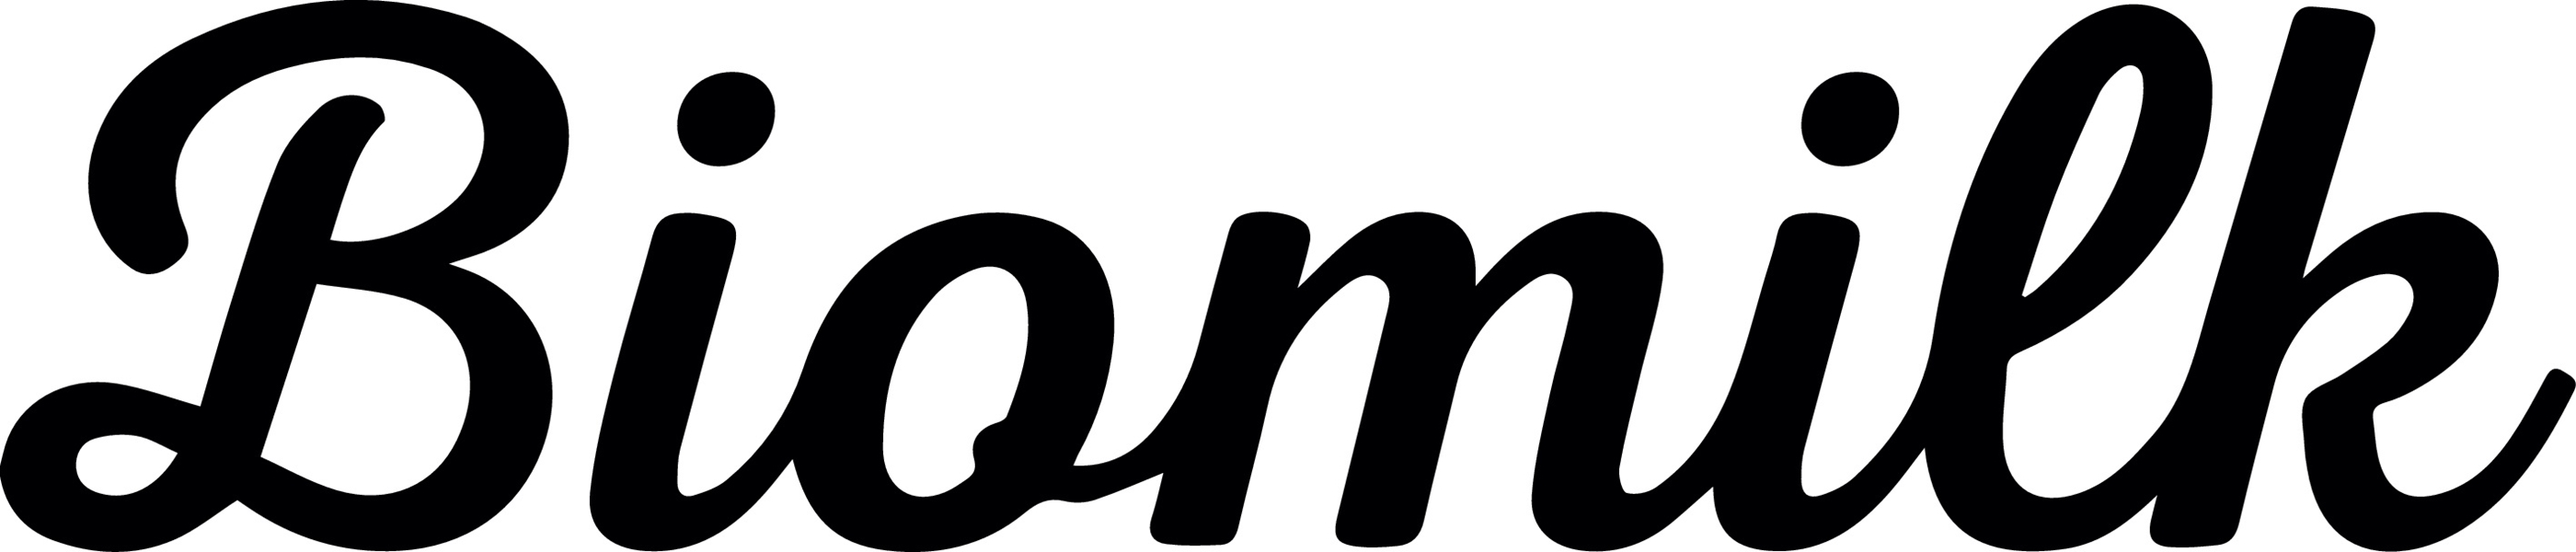 Biomilk Logo